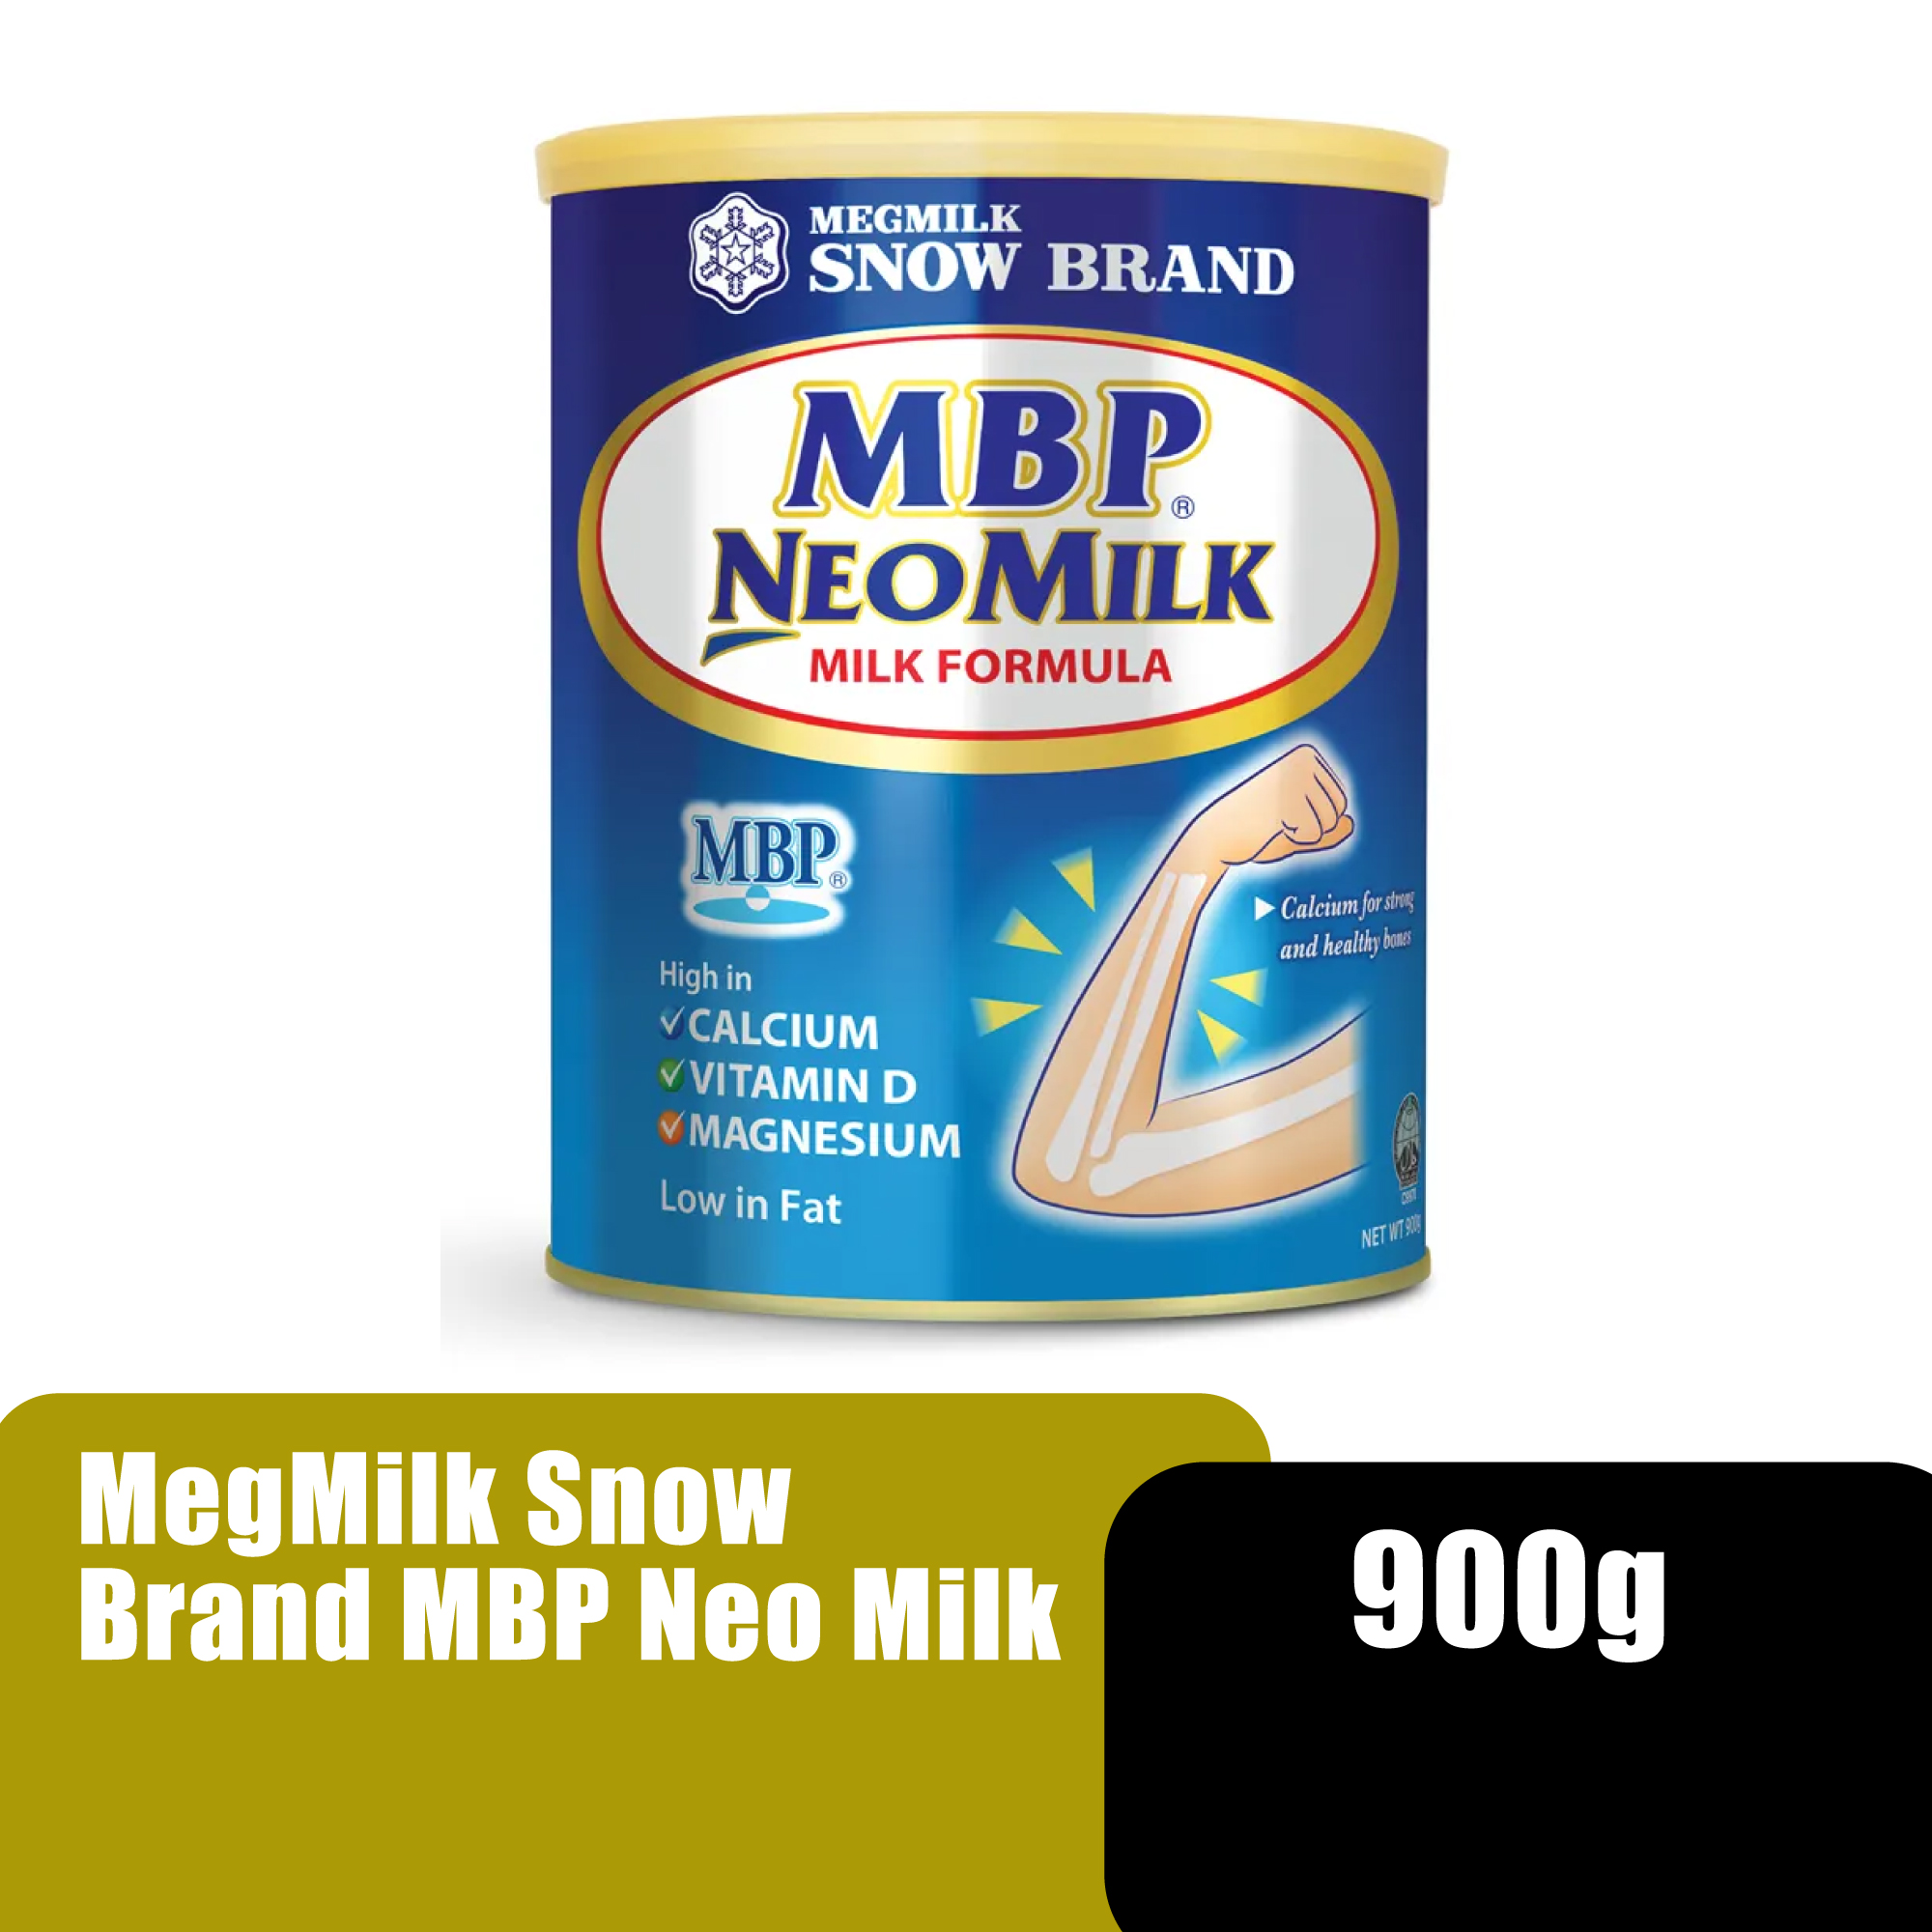 Megmilk Snow Brand Mbp Neo Milk Powder for Bone Health - 900G